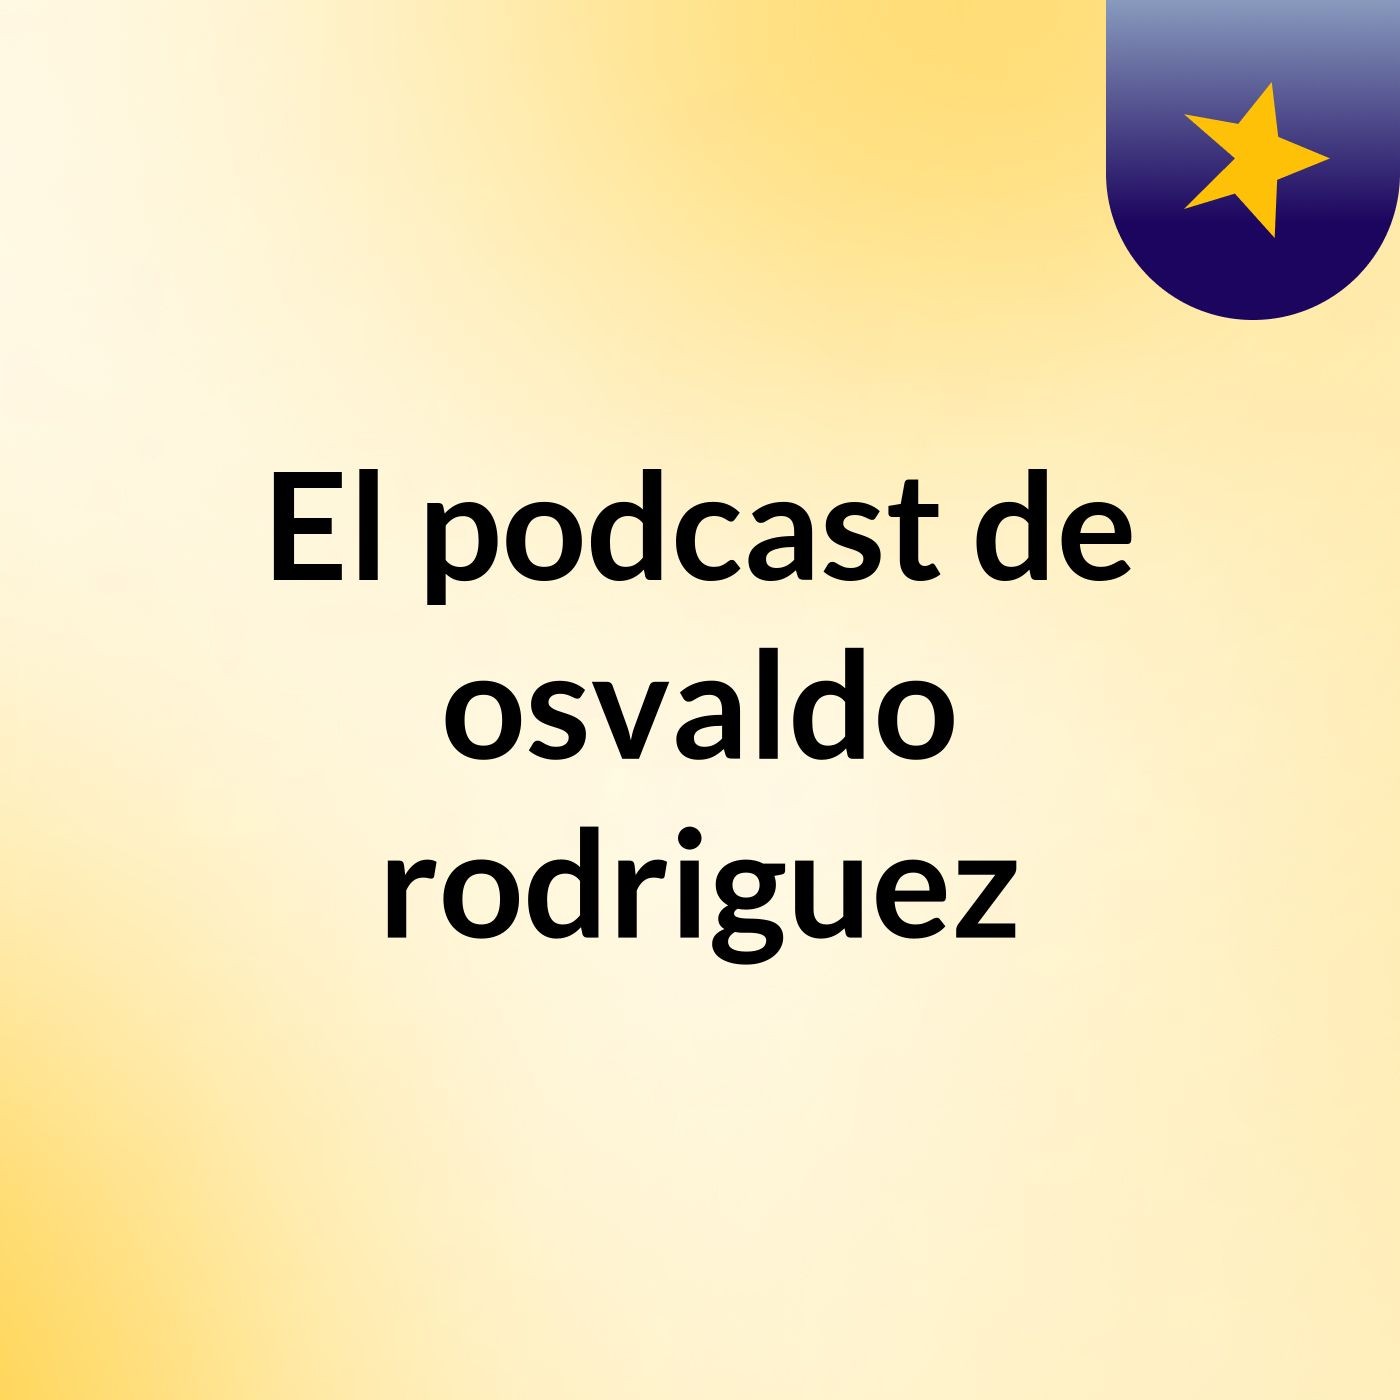 El podcast de osvaldo rodriguez